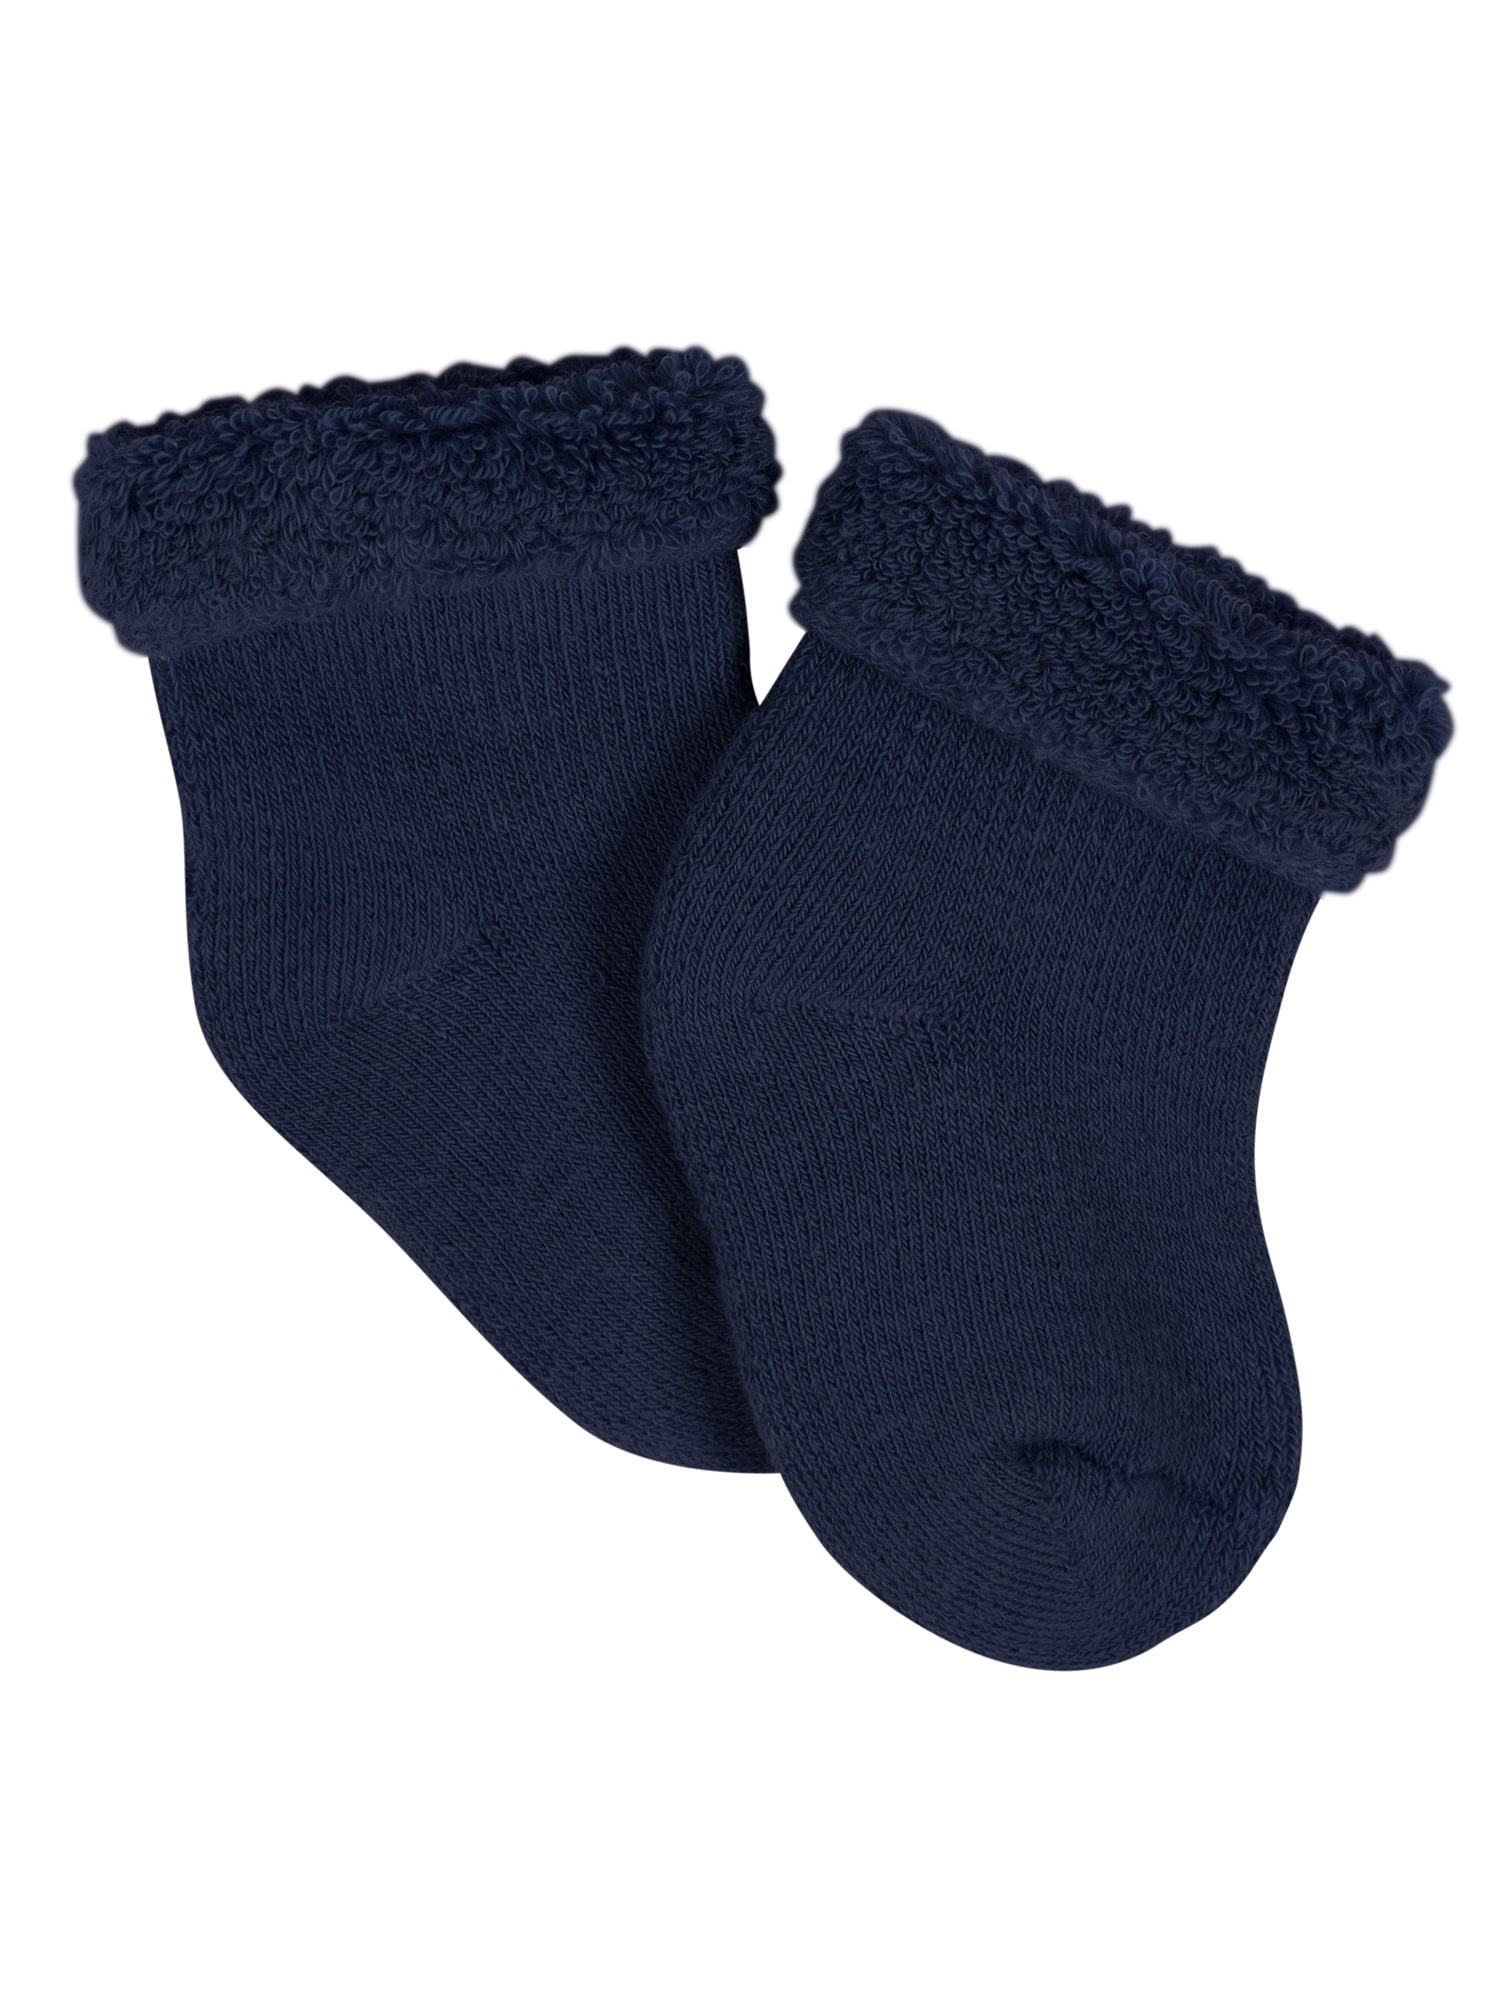 ⭕🔴NWT Gymboree Baby blue socks. Size 12-24 mos.